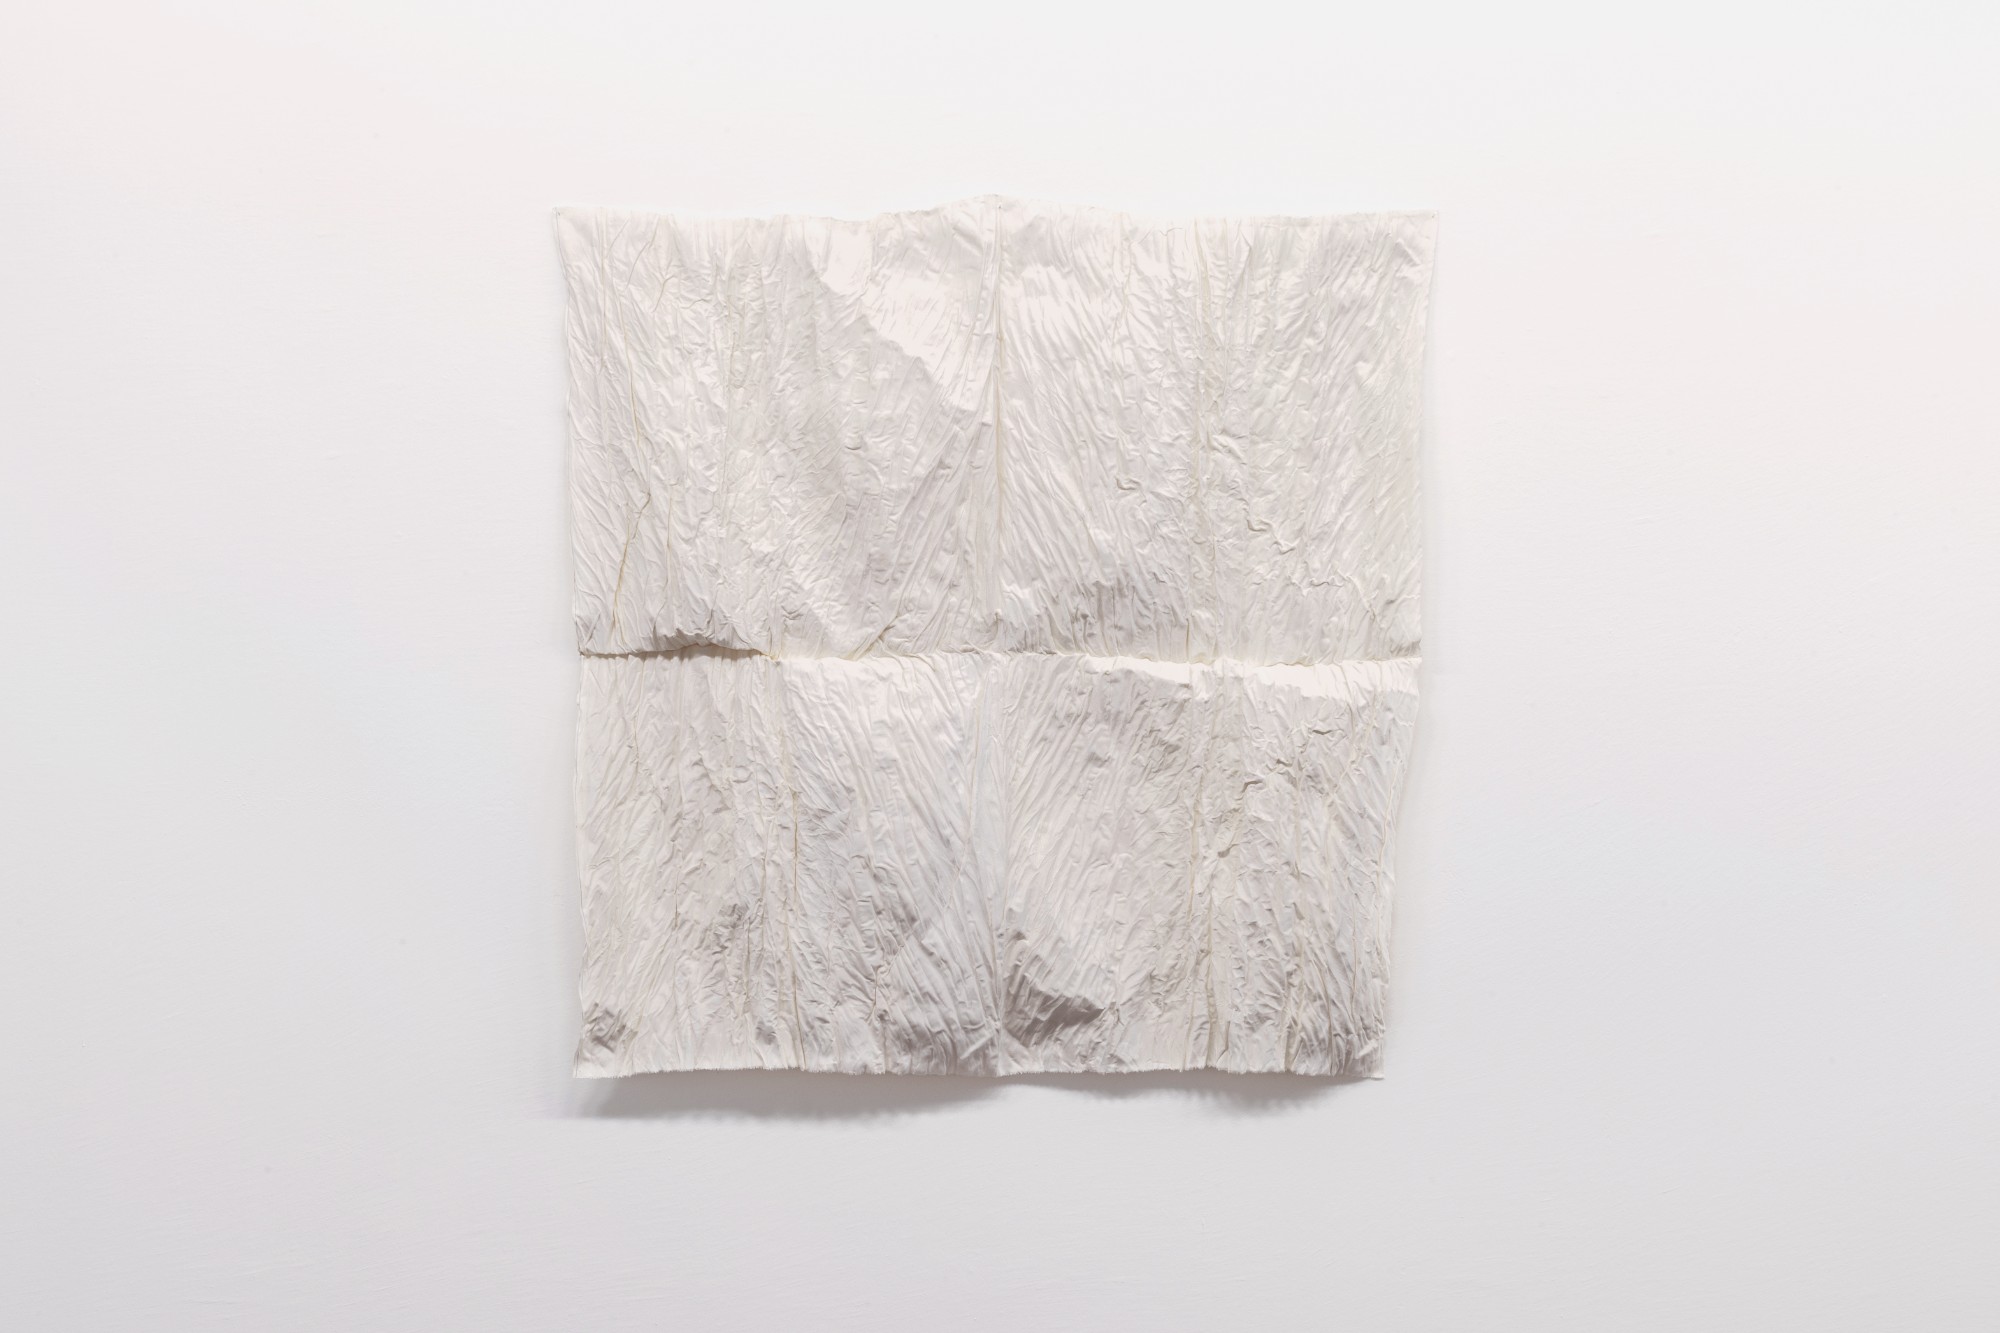 Edith Dekyndt, untitled, 2021, velvet, rice starch,  120 x 120 x 15 cm